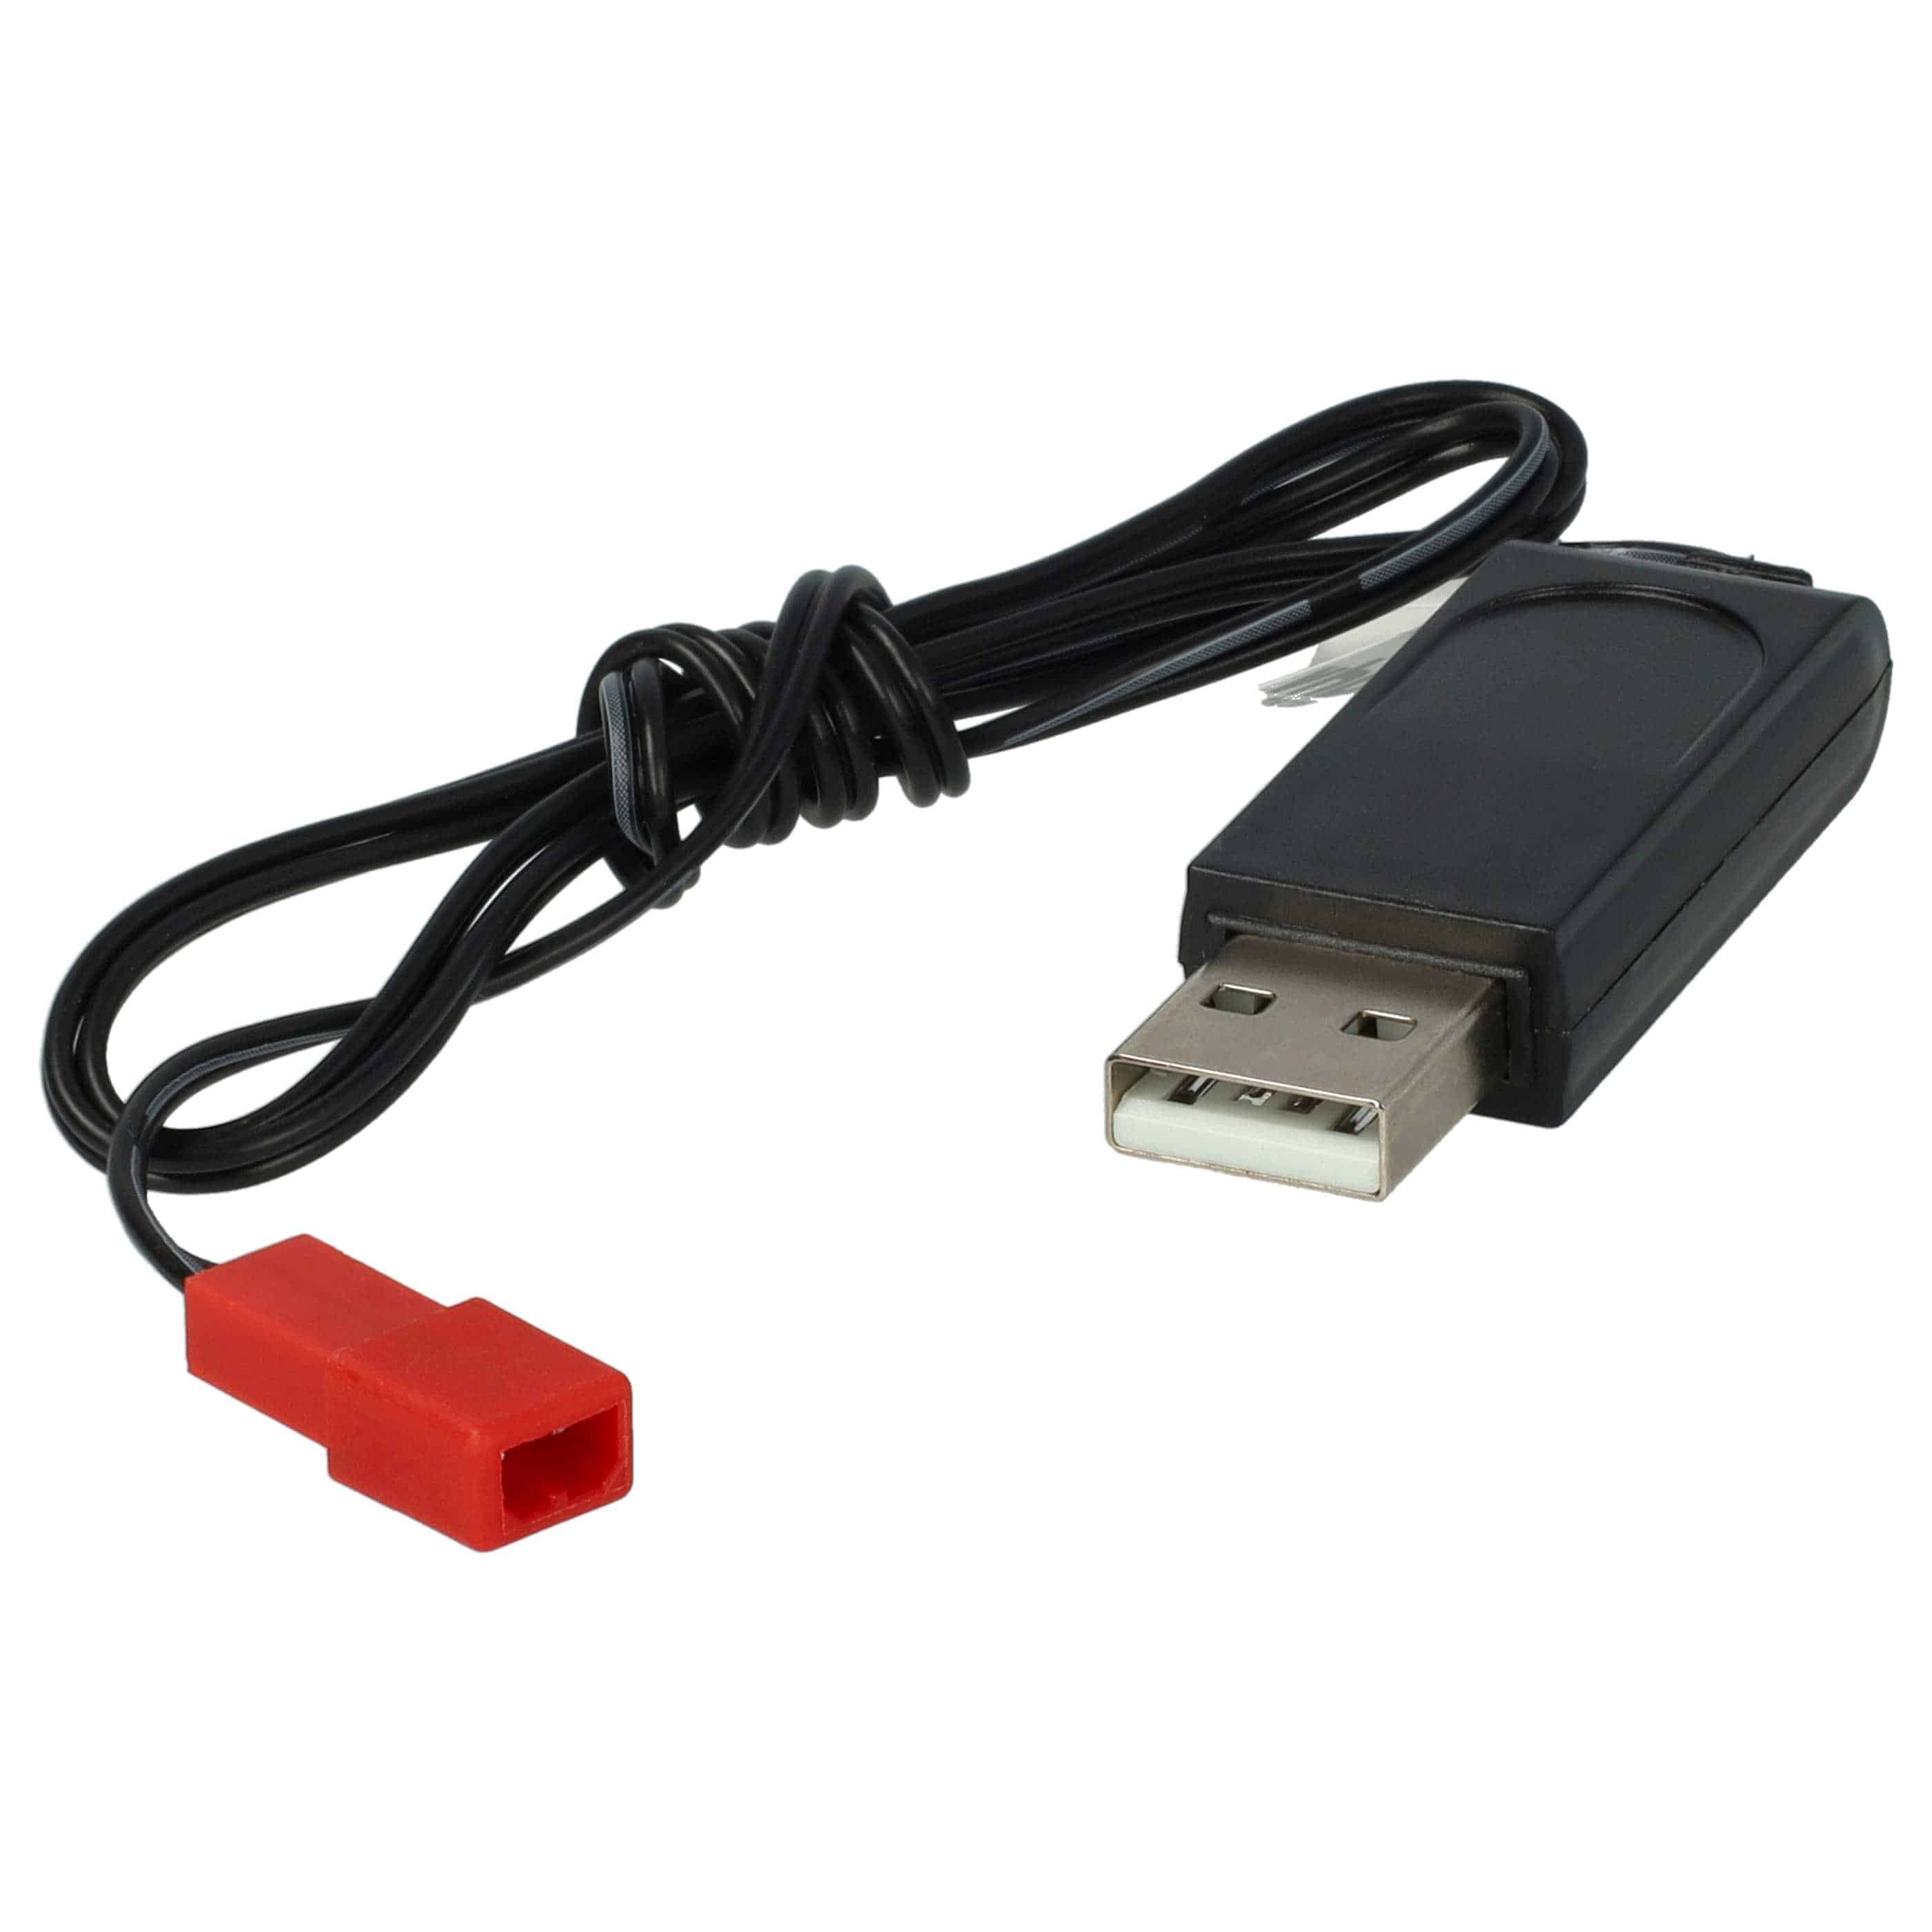 USB-Ladekabel passend für RC-Akkus mit JST-Anschluss, RC-Modellbau Akkupacks - 60cm 4,8V